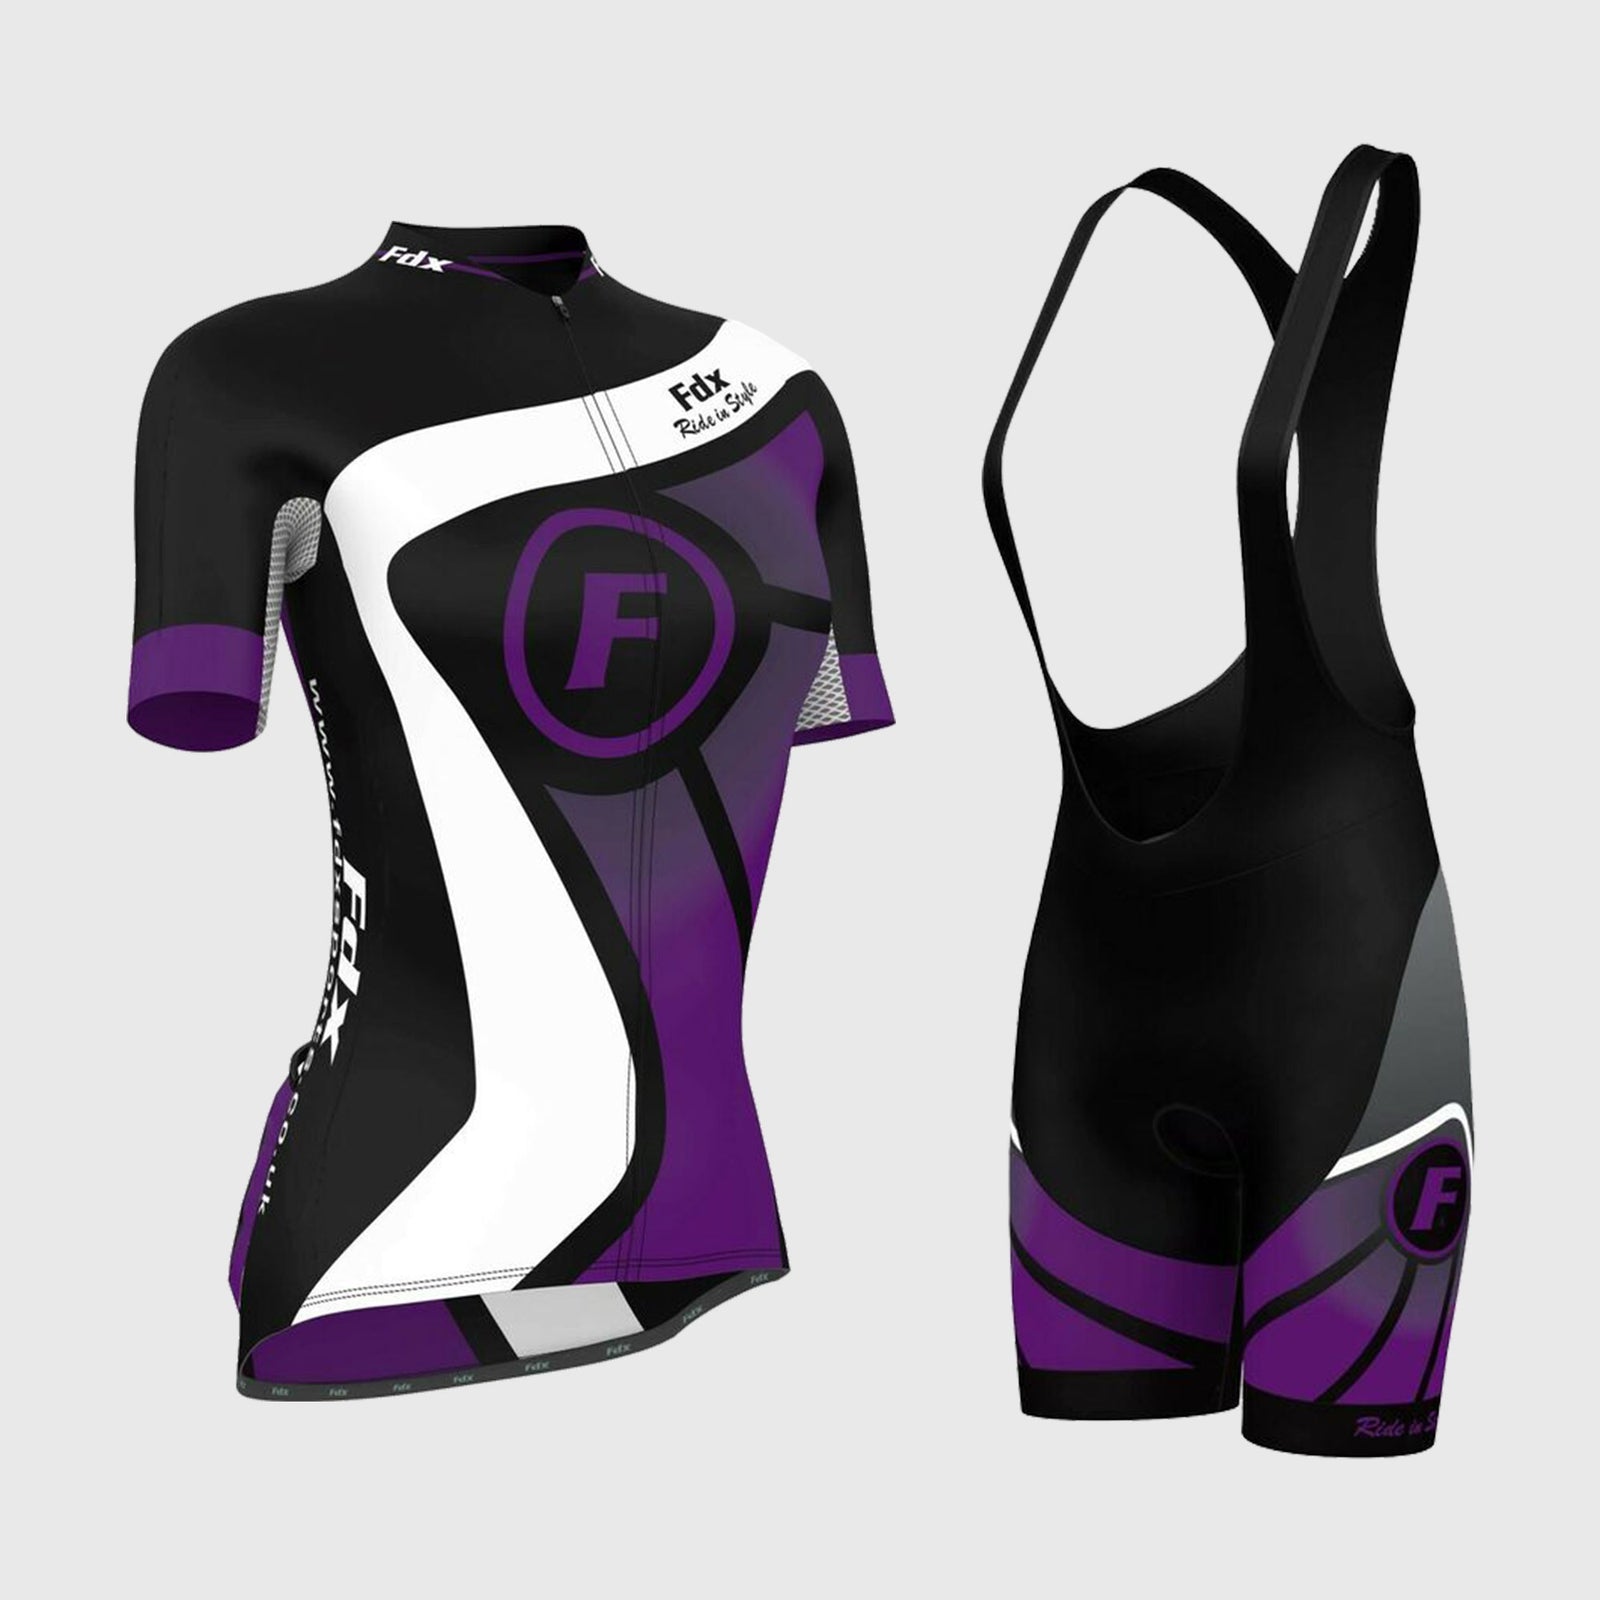 Fdx Women's Black & Purple Short Sleeve Cycling Jersey & Gel Padded Bib Shorts Best Summer Road Bike Wear Light Weight, Hi viz Reflectors & Pockets - Signature